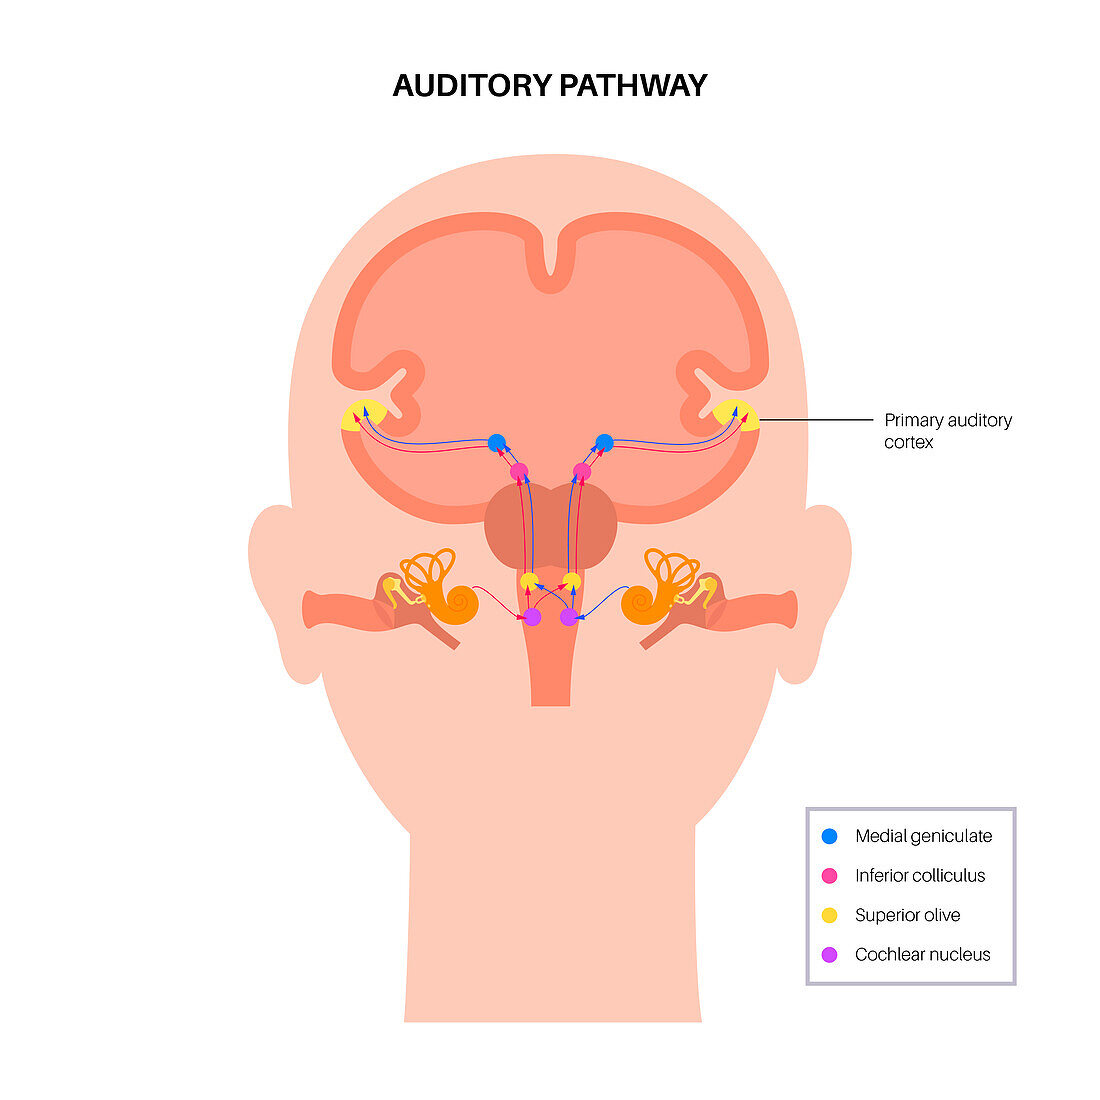 Auditory pathway, illustration